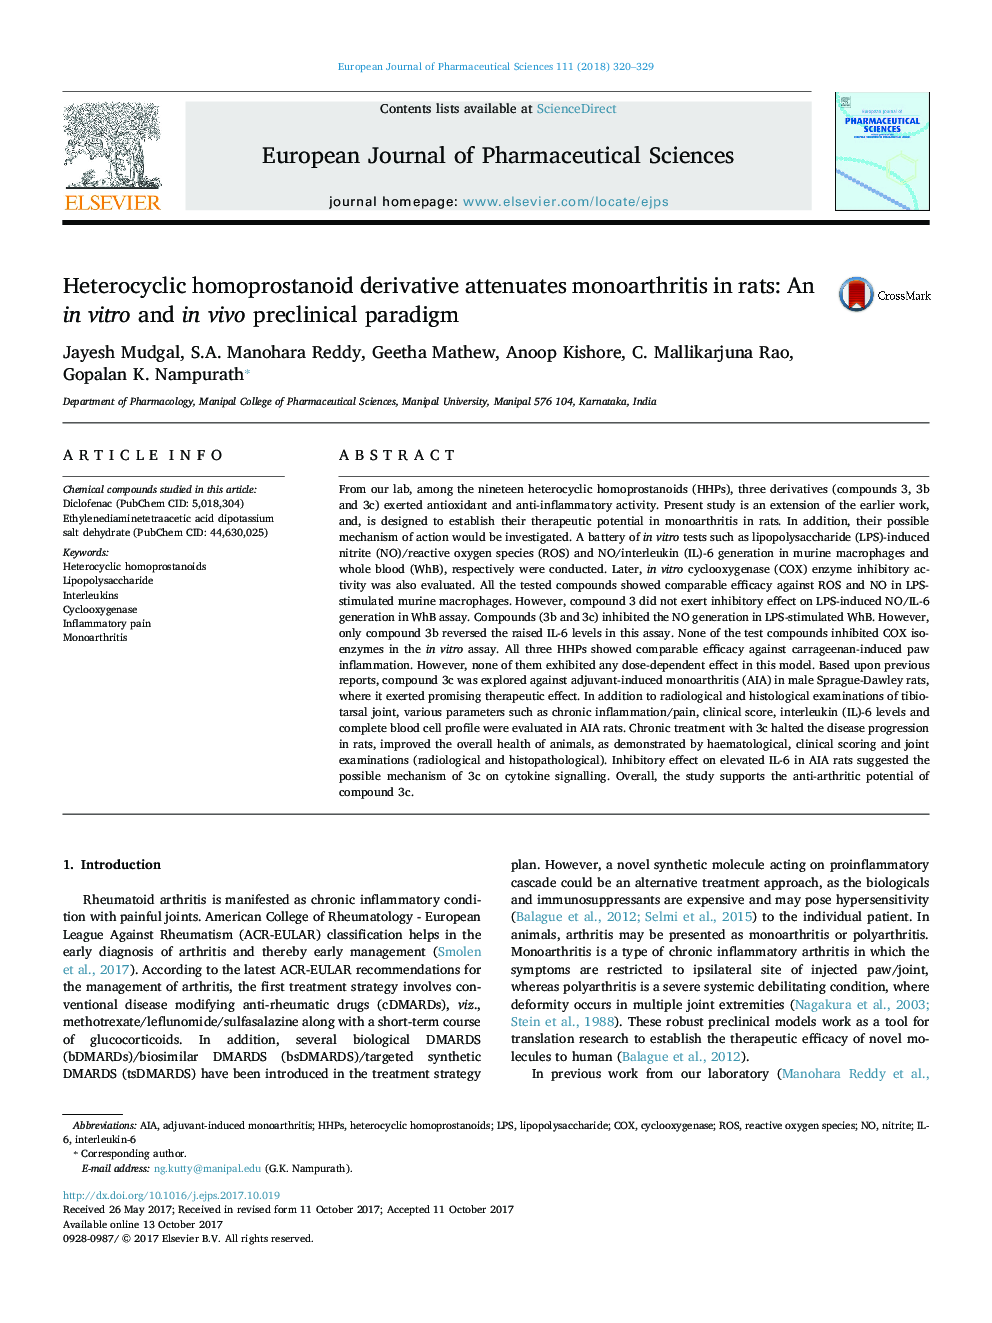 Heterocyclic homoprostanoid derivative attenuates monoarthritis in rats: An in vitro and in vivo preclinical paradigm